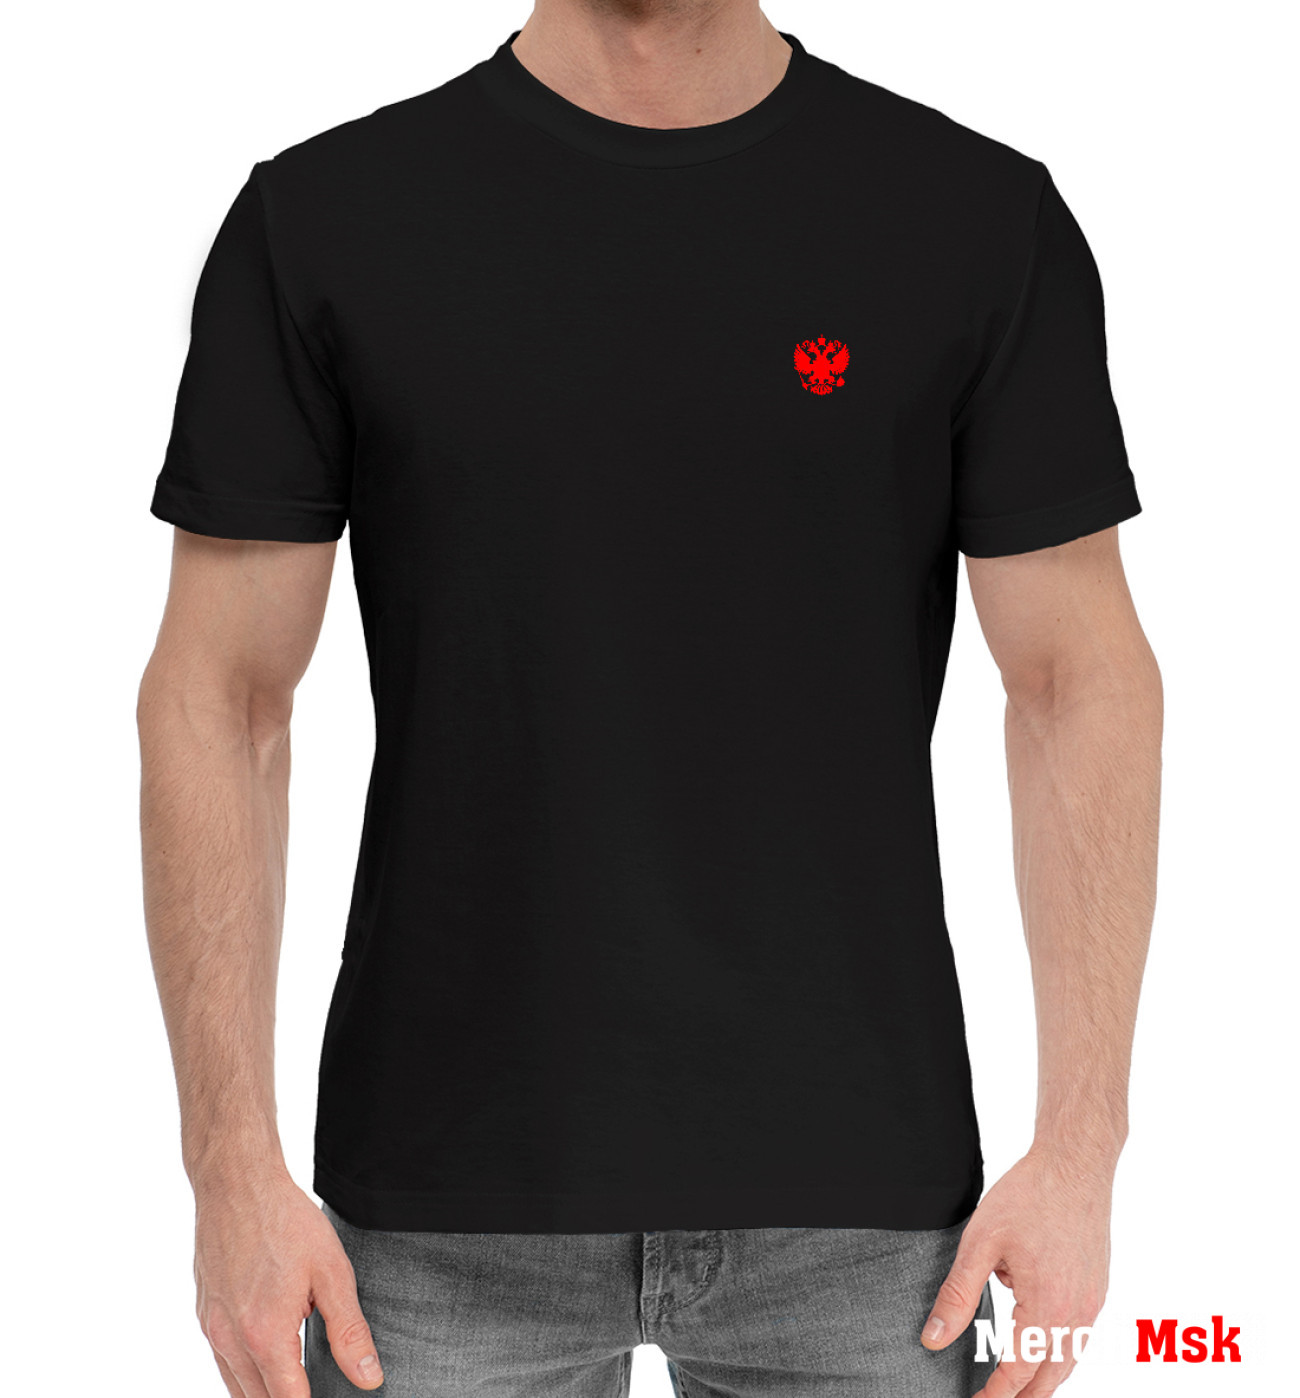 Мужская Хлопковая футболка Россия, артикул: SRF-163351-hfu-2